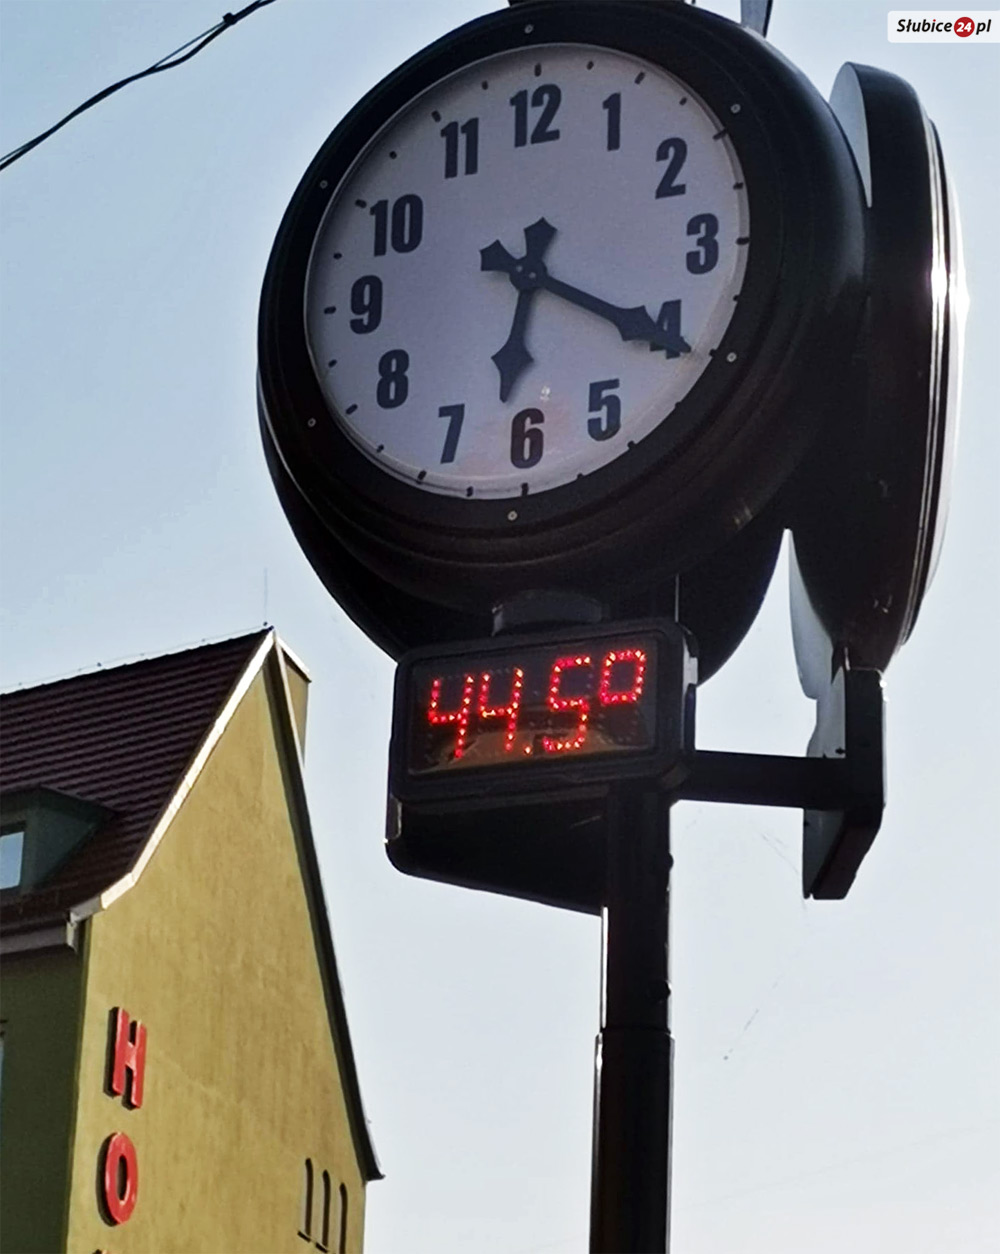 Zegar Słubice